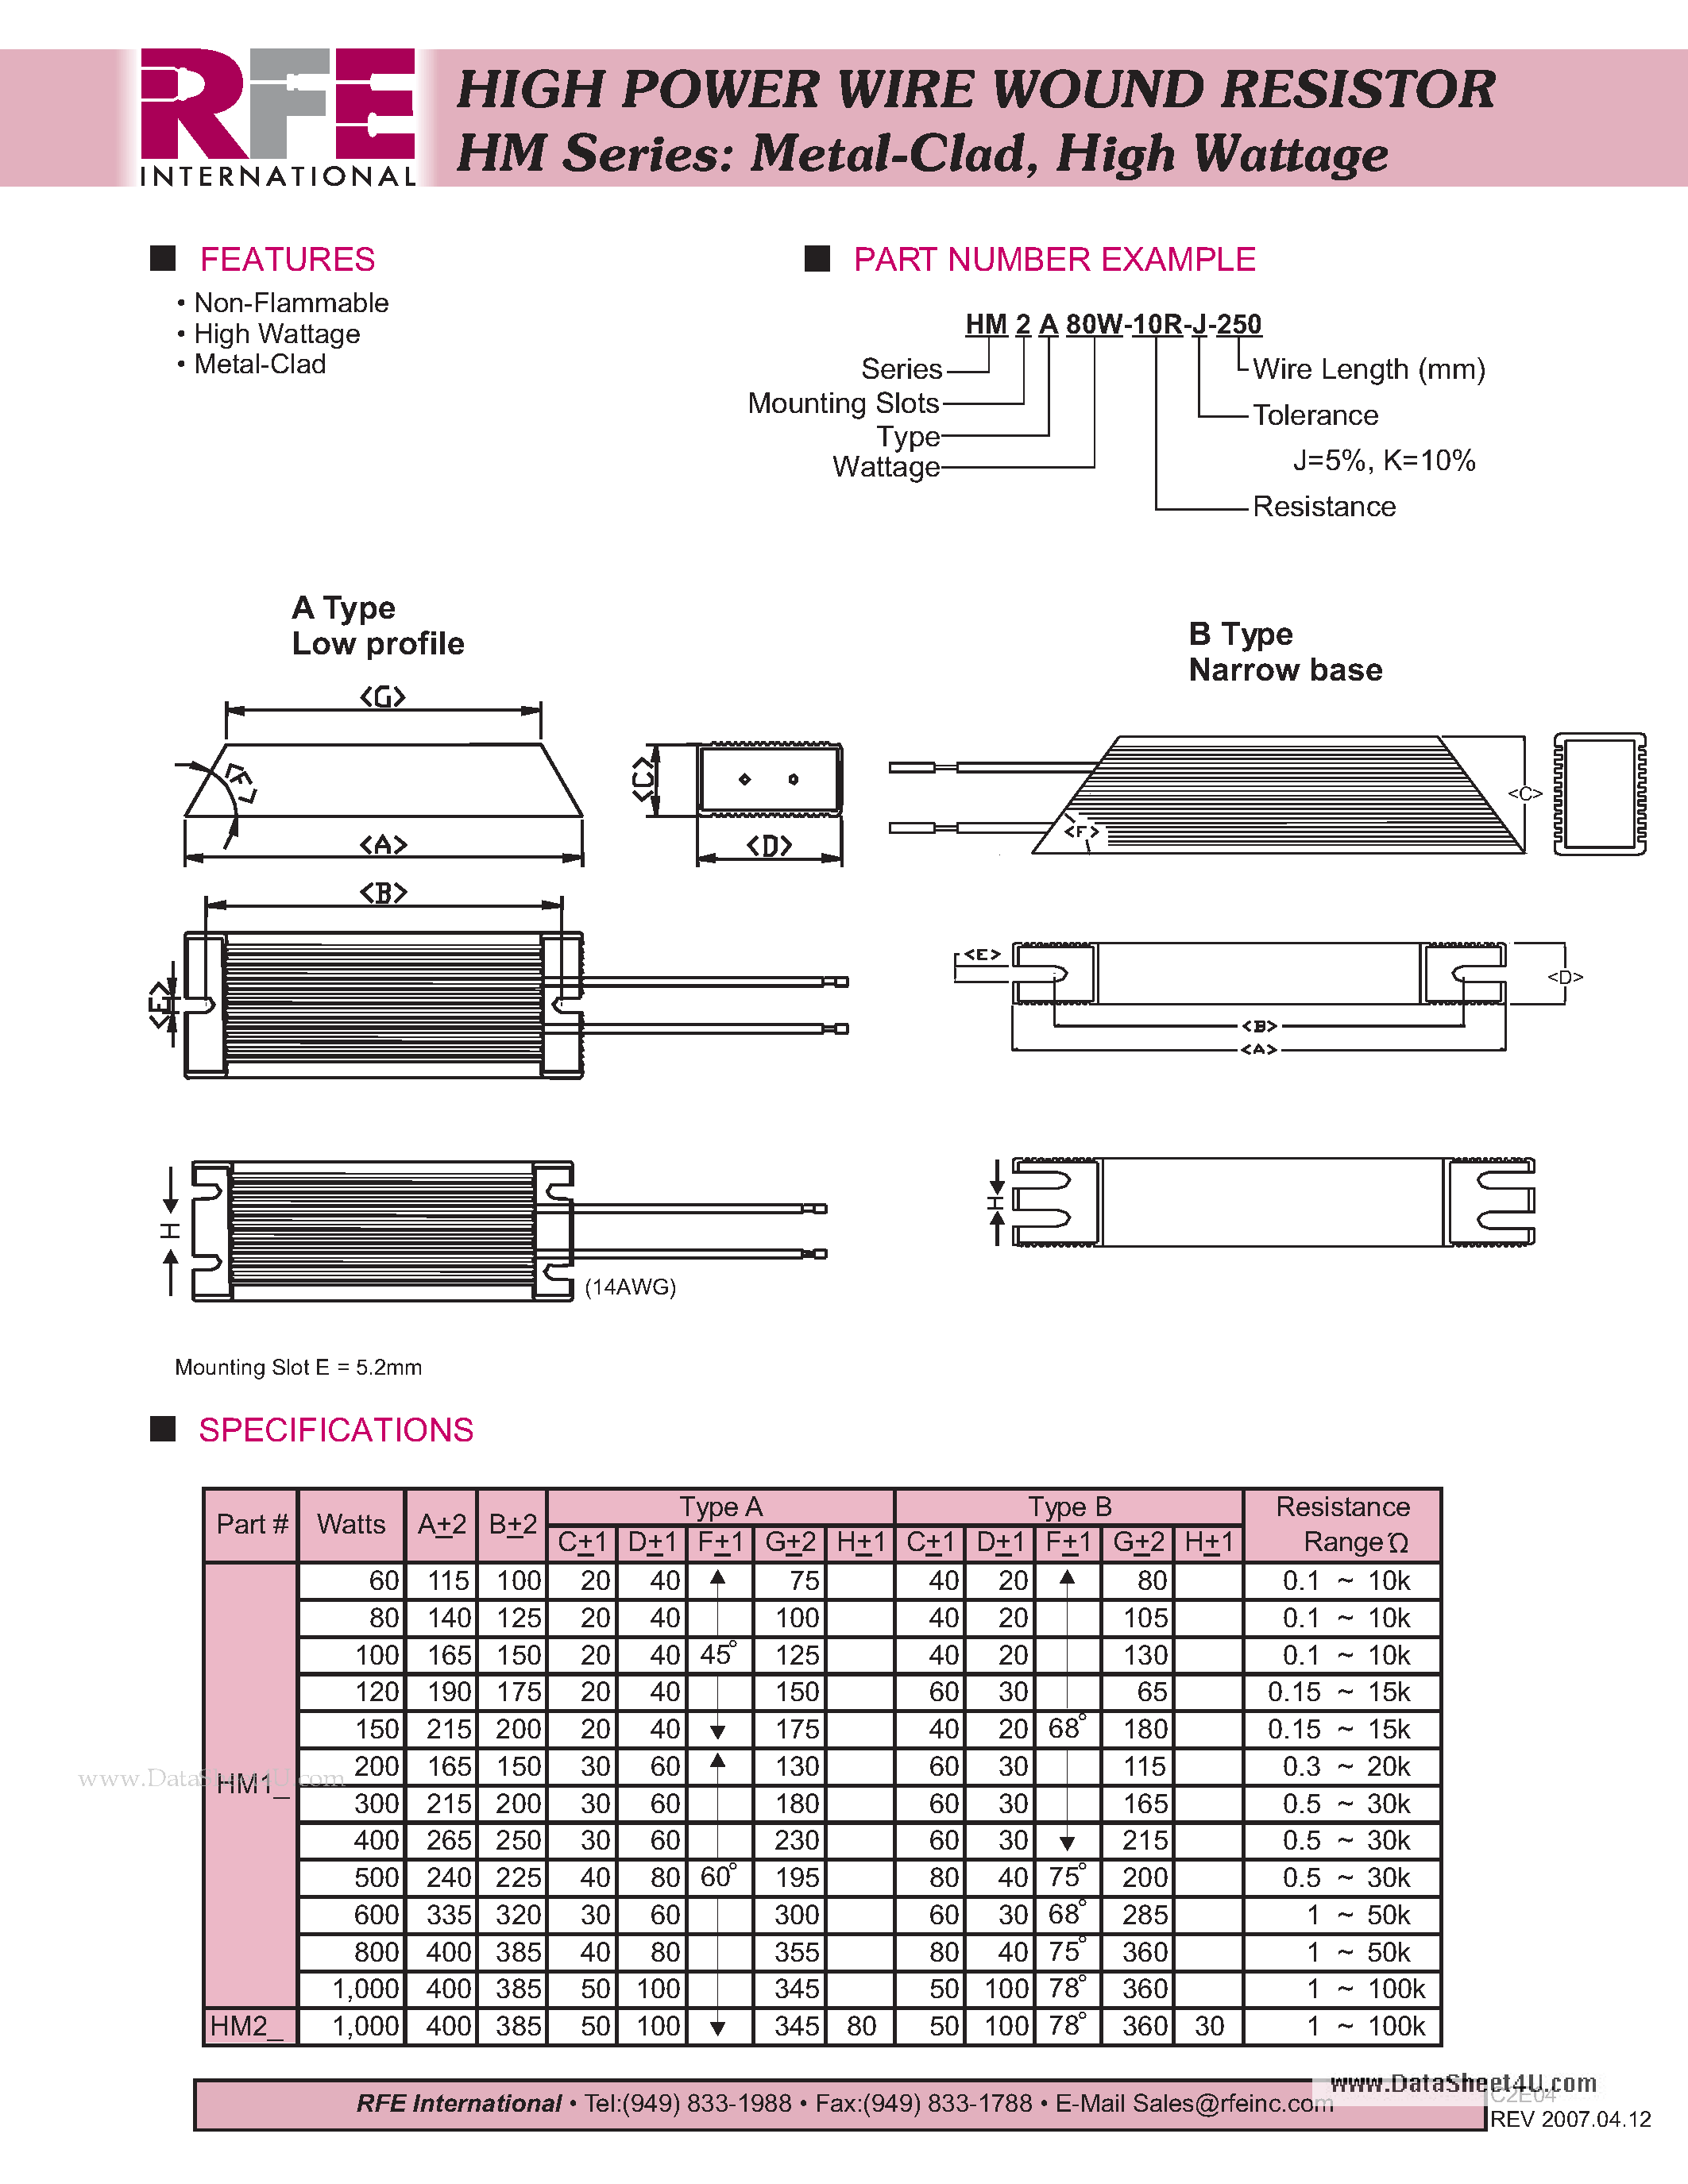 Datasheet HM1B1000W-10R-J-250 - HIGH POWER WIRE WOUND RESISTOR HM Series page 1